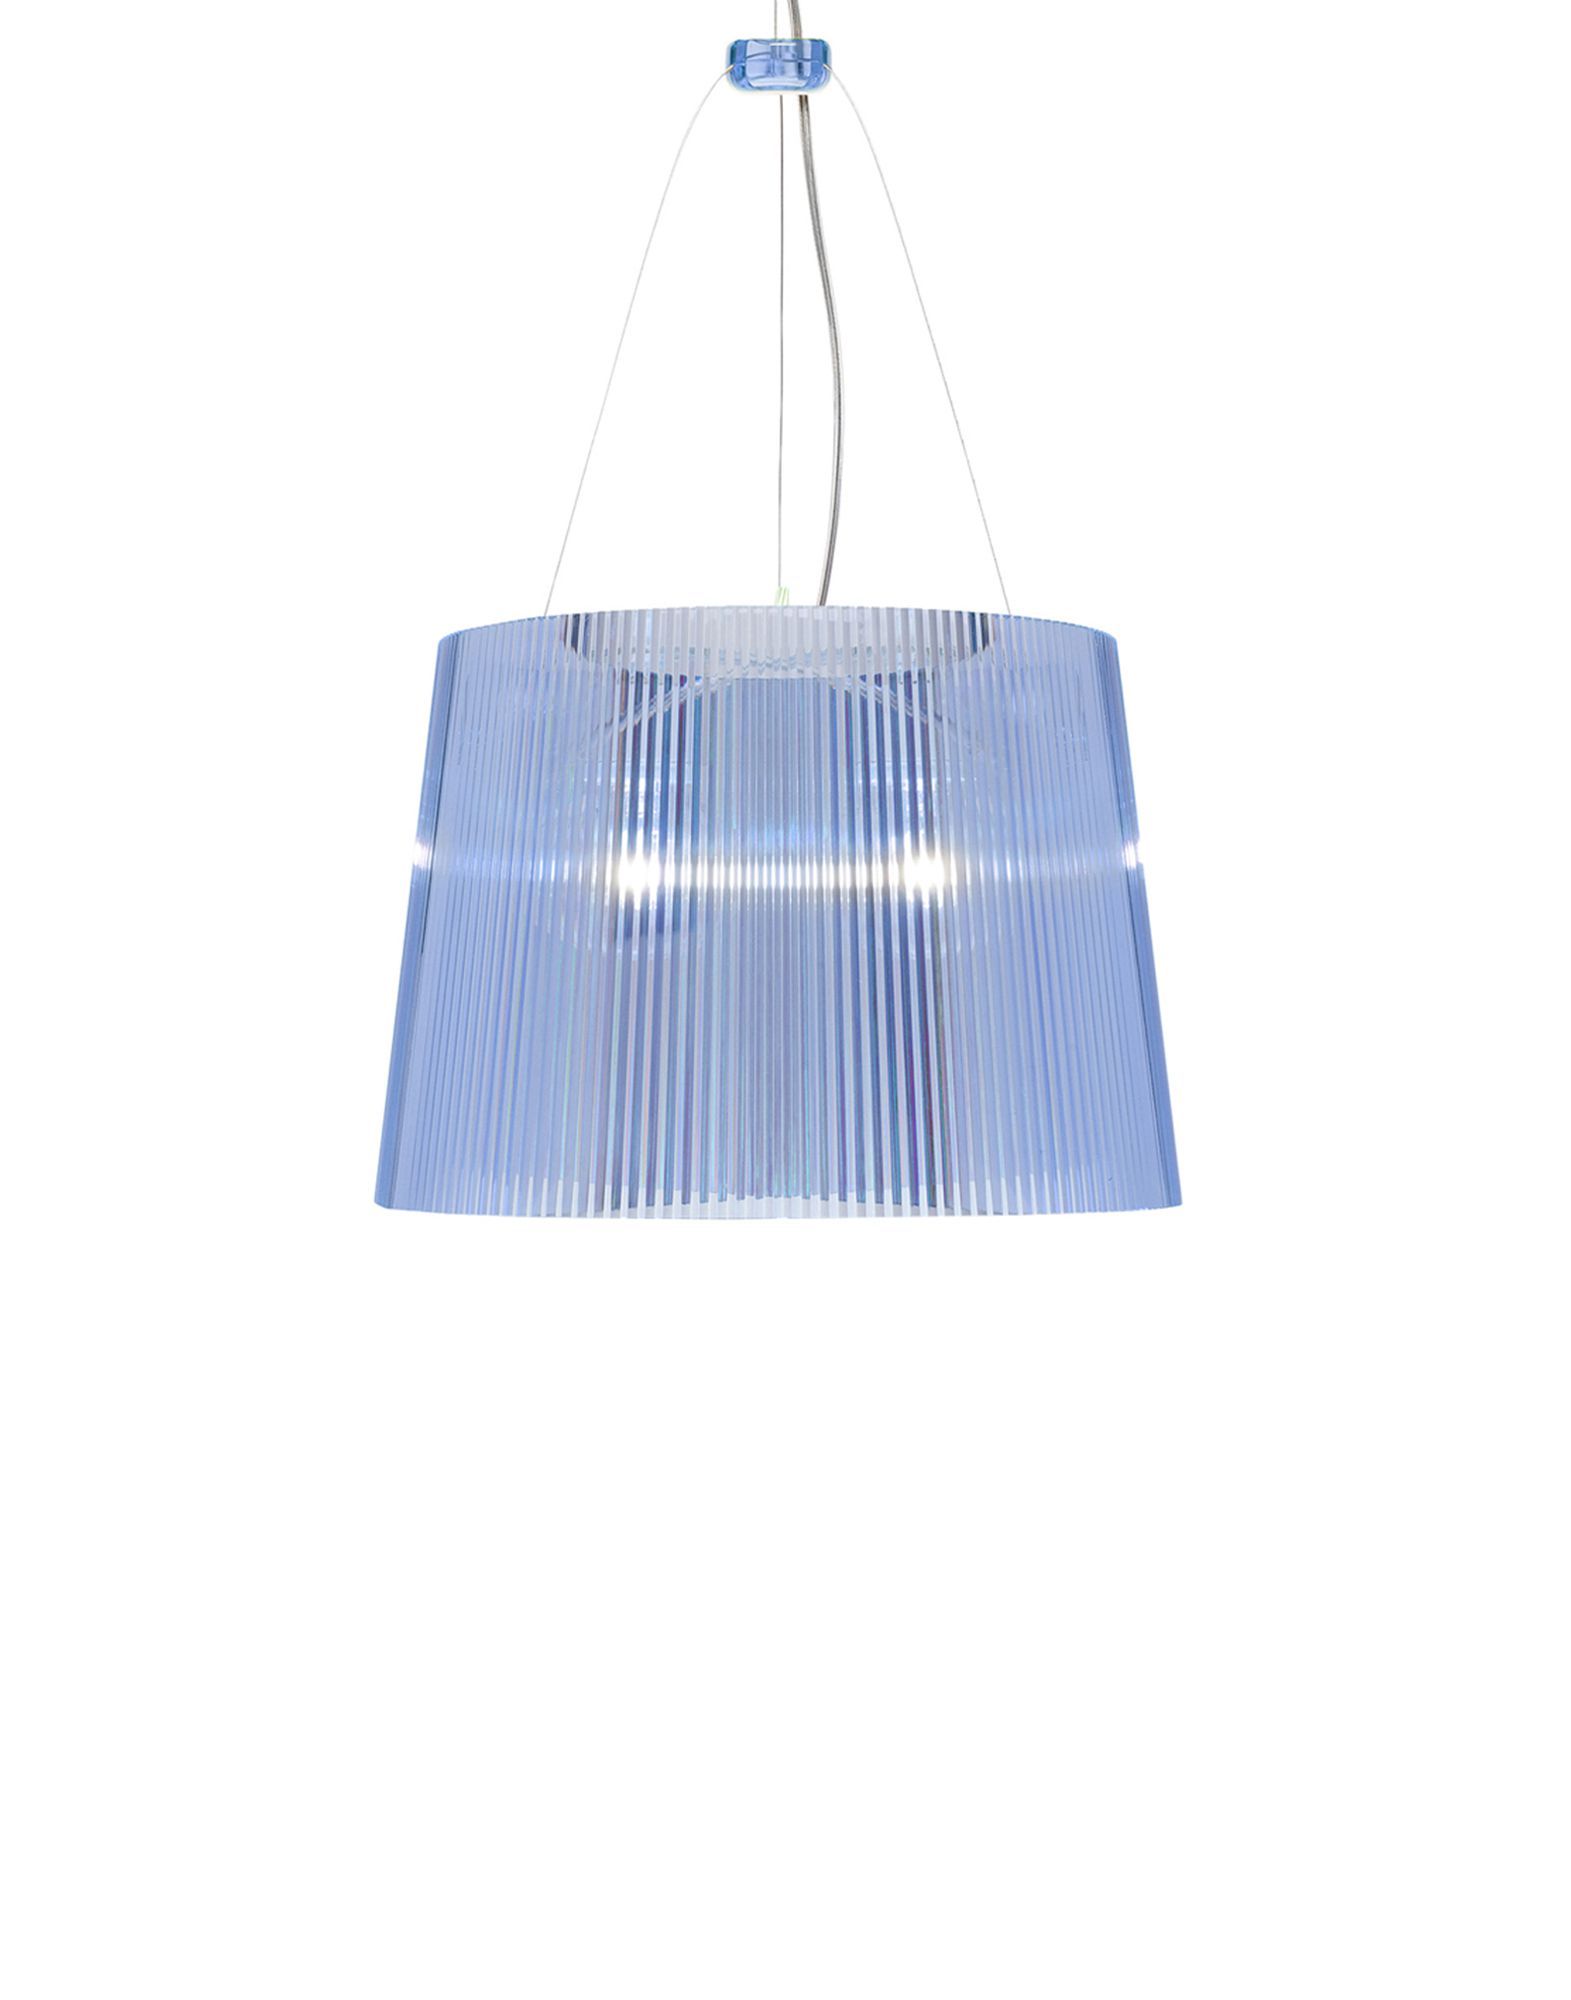 Suspensie Kartell Ge’ design Ferruccio Laviani E27 max 70W h37cm bleu transparent 70W